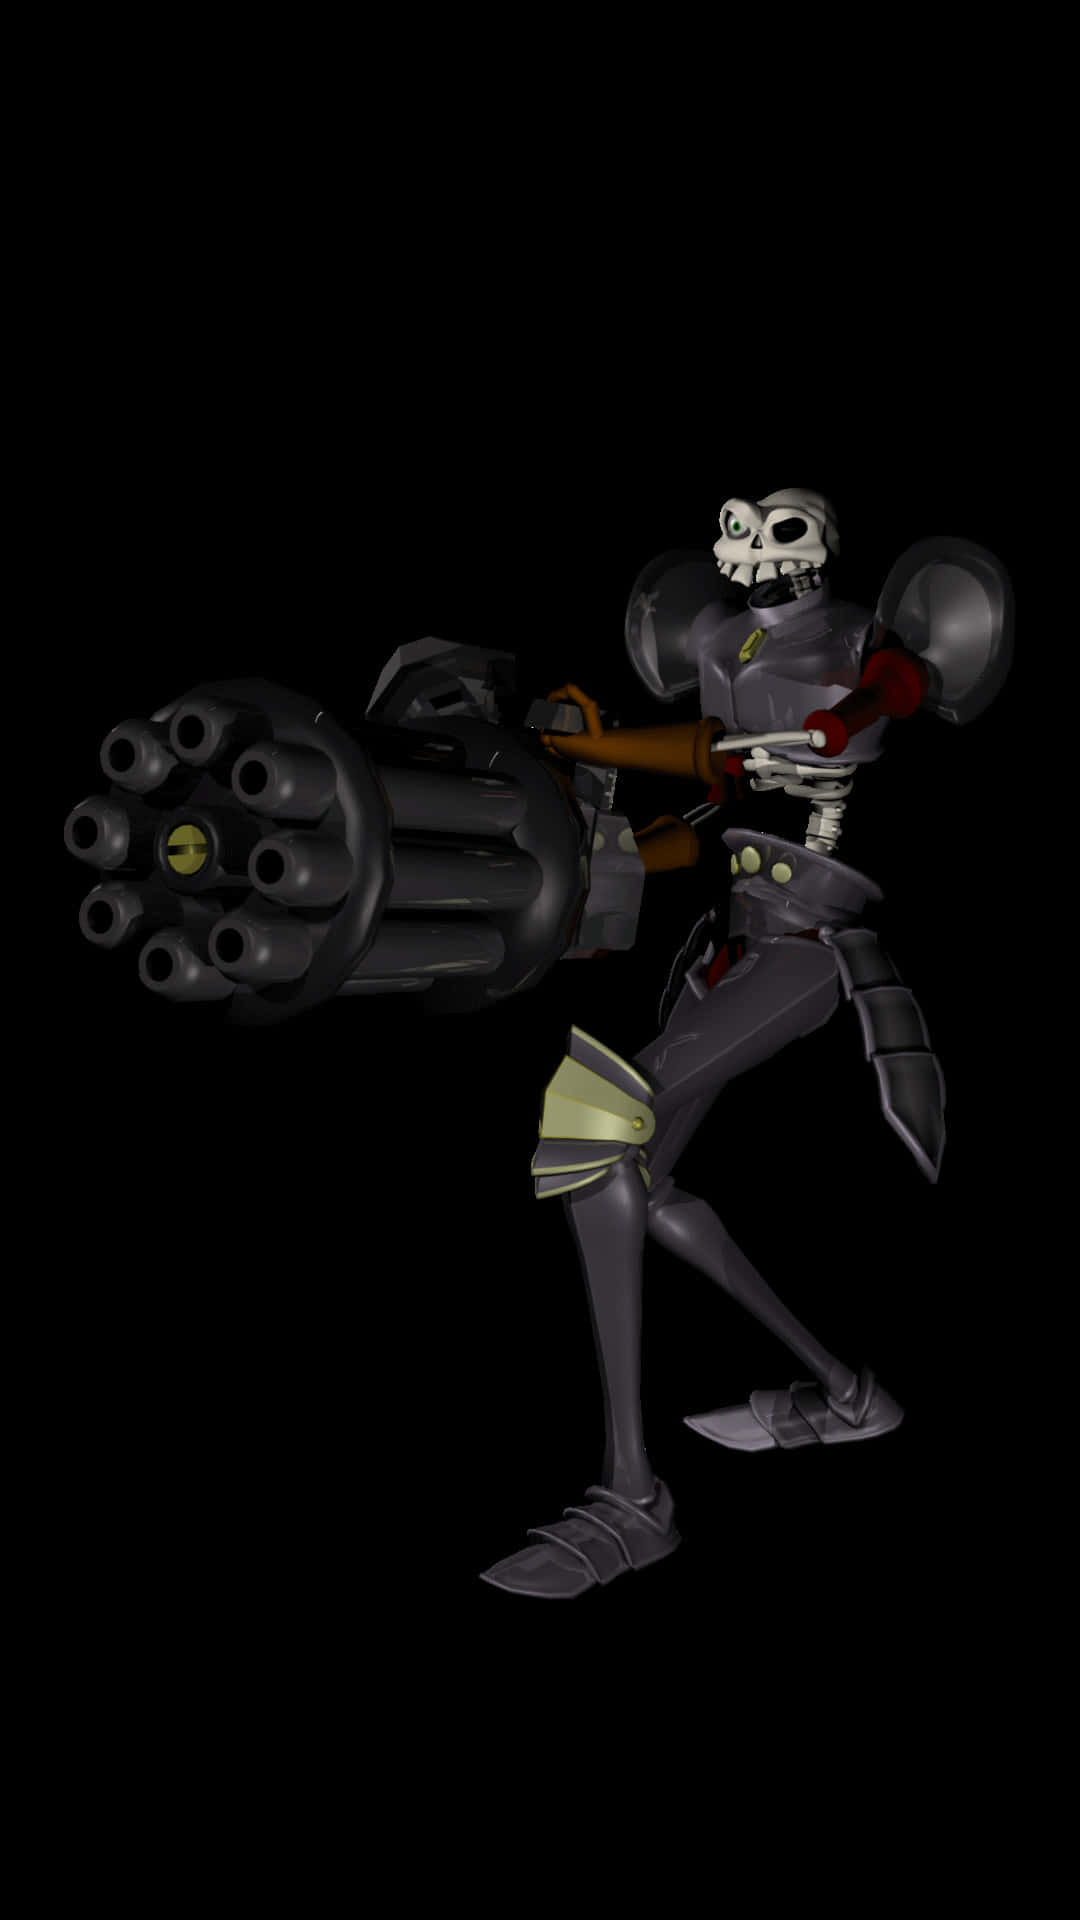 A Skeleton Holding A Gun